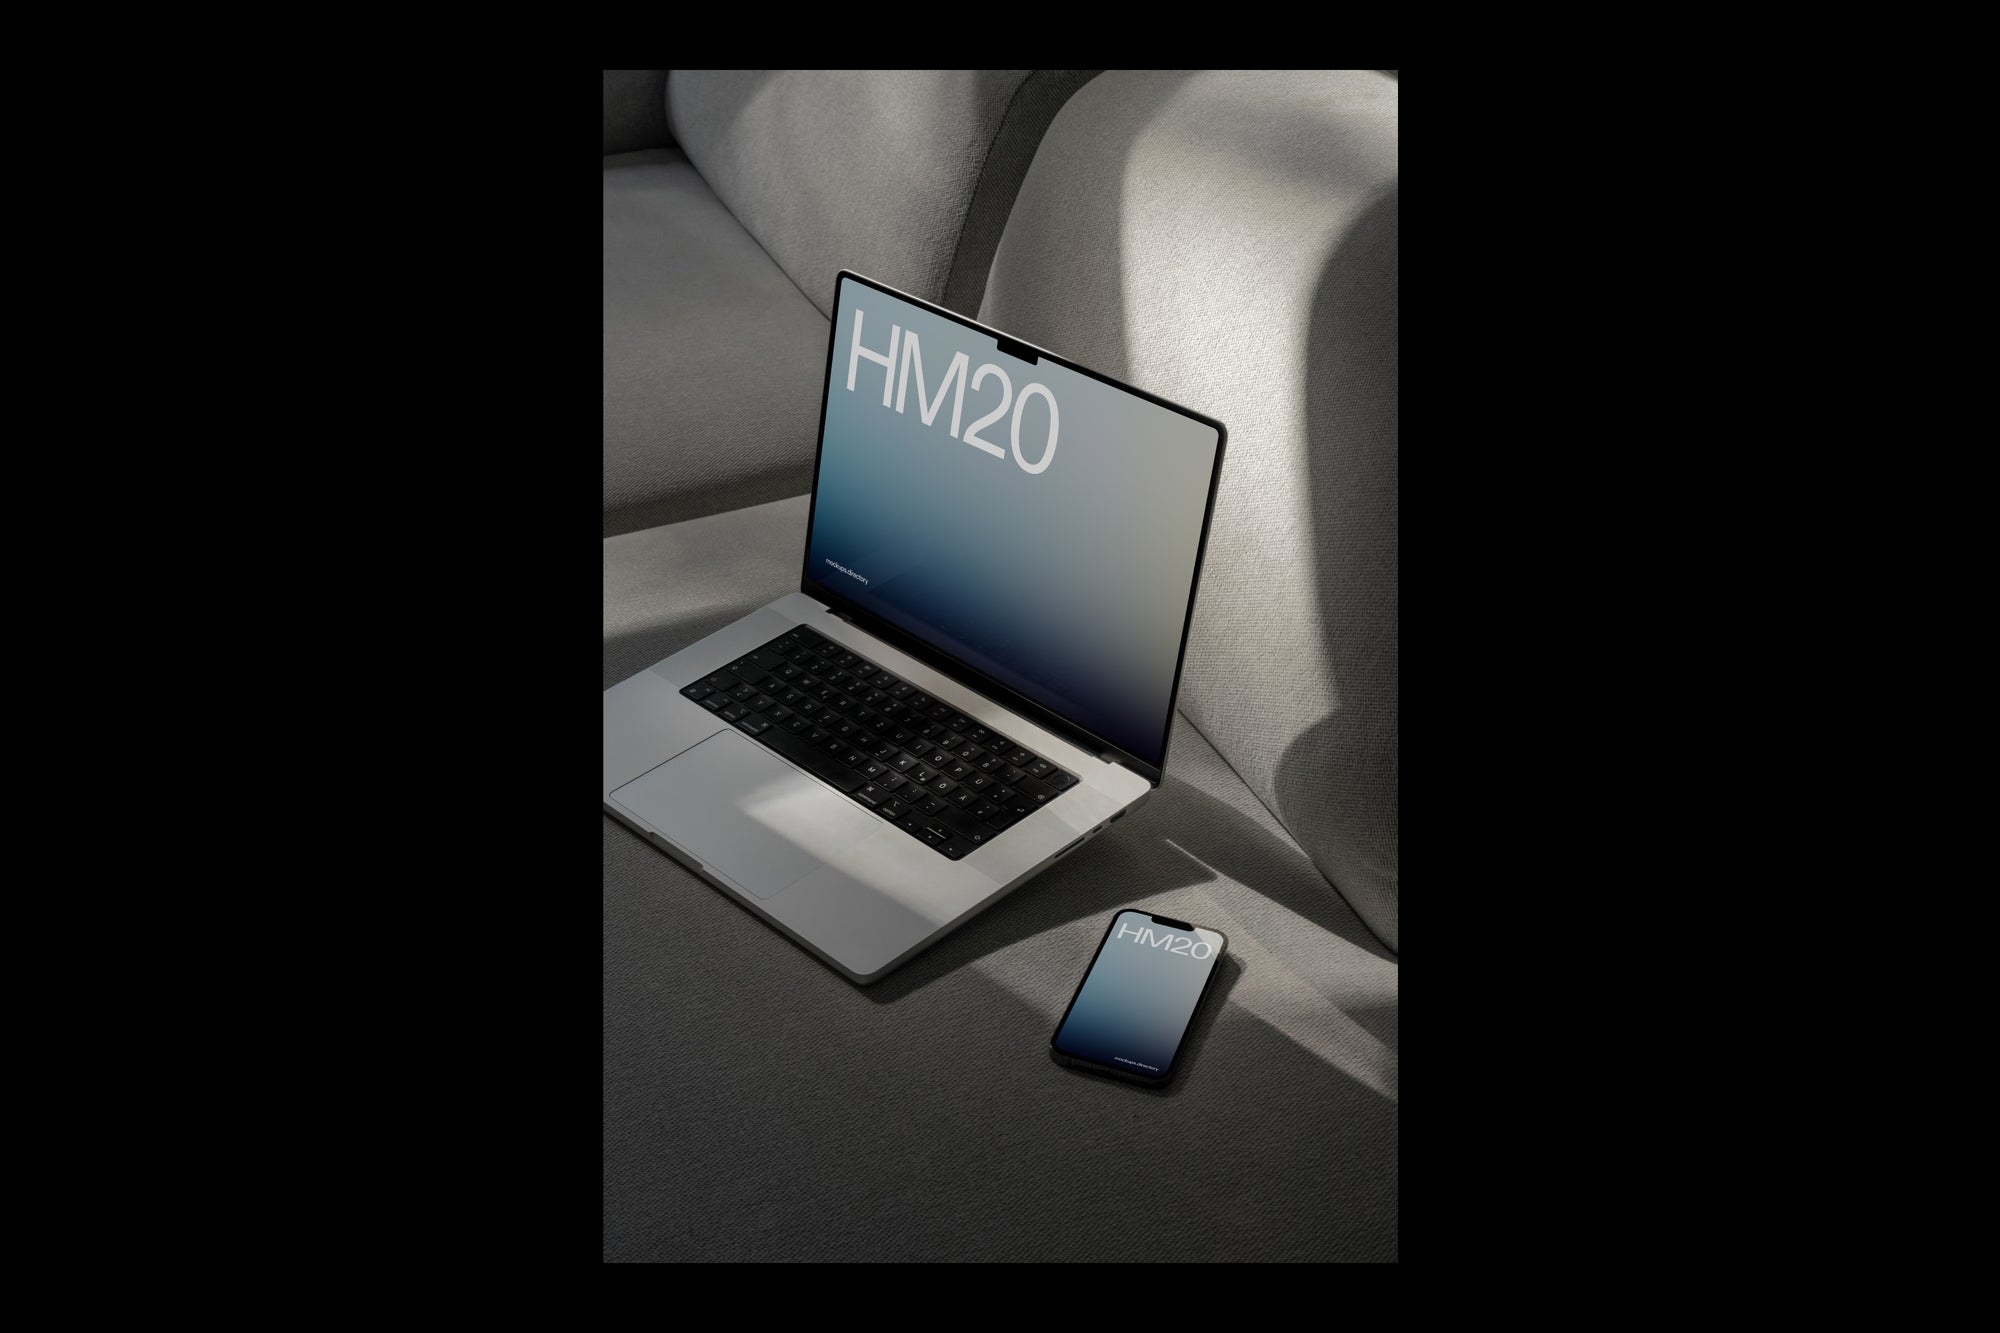 HM20 — MacBook + iPhone